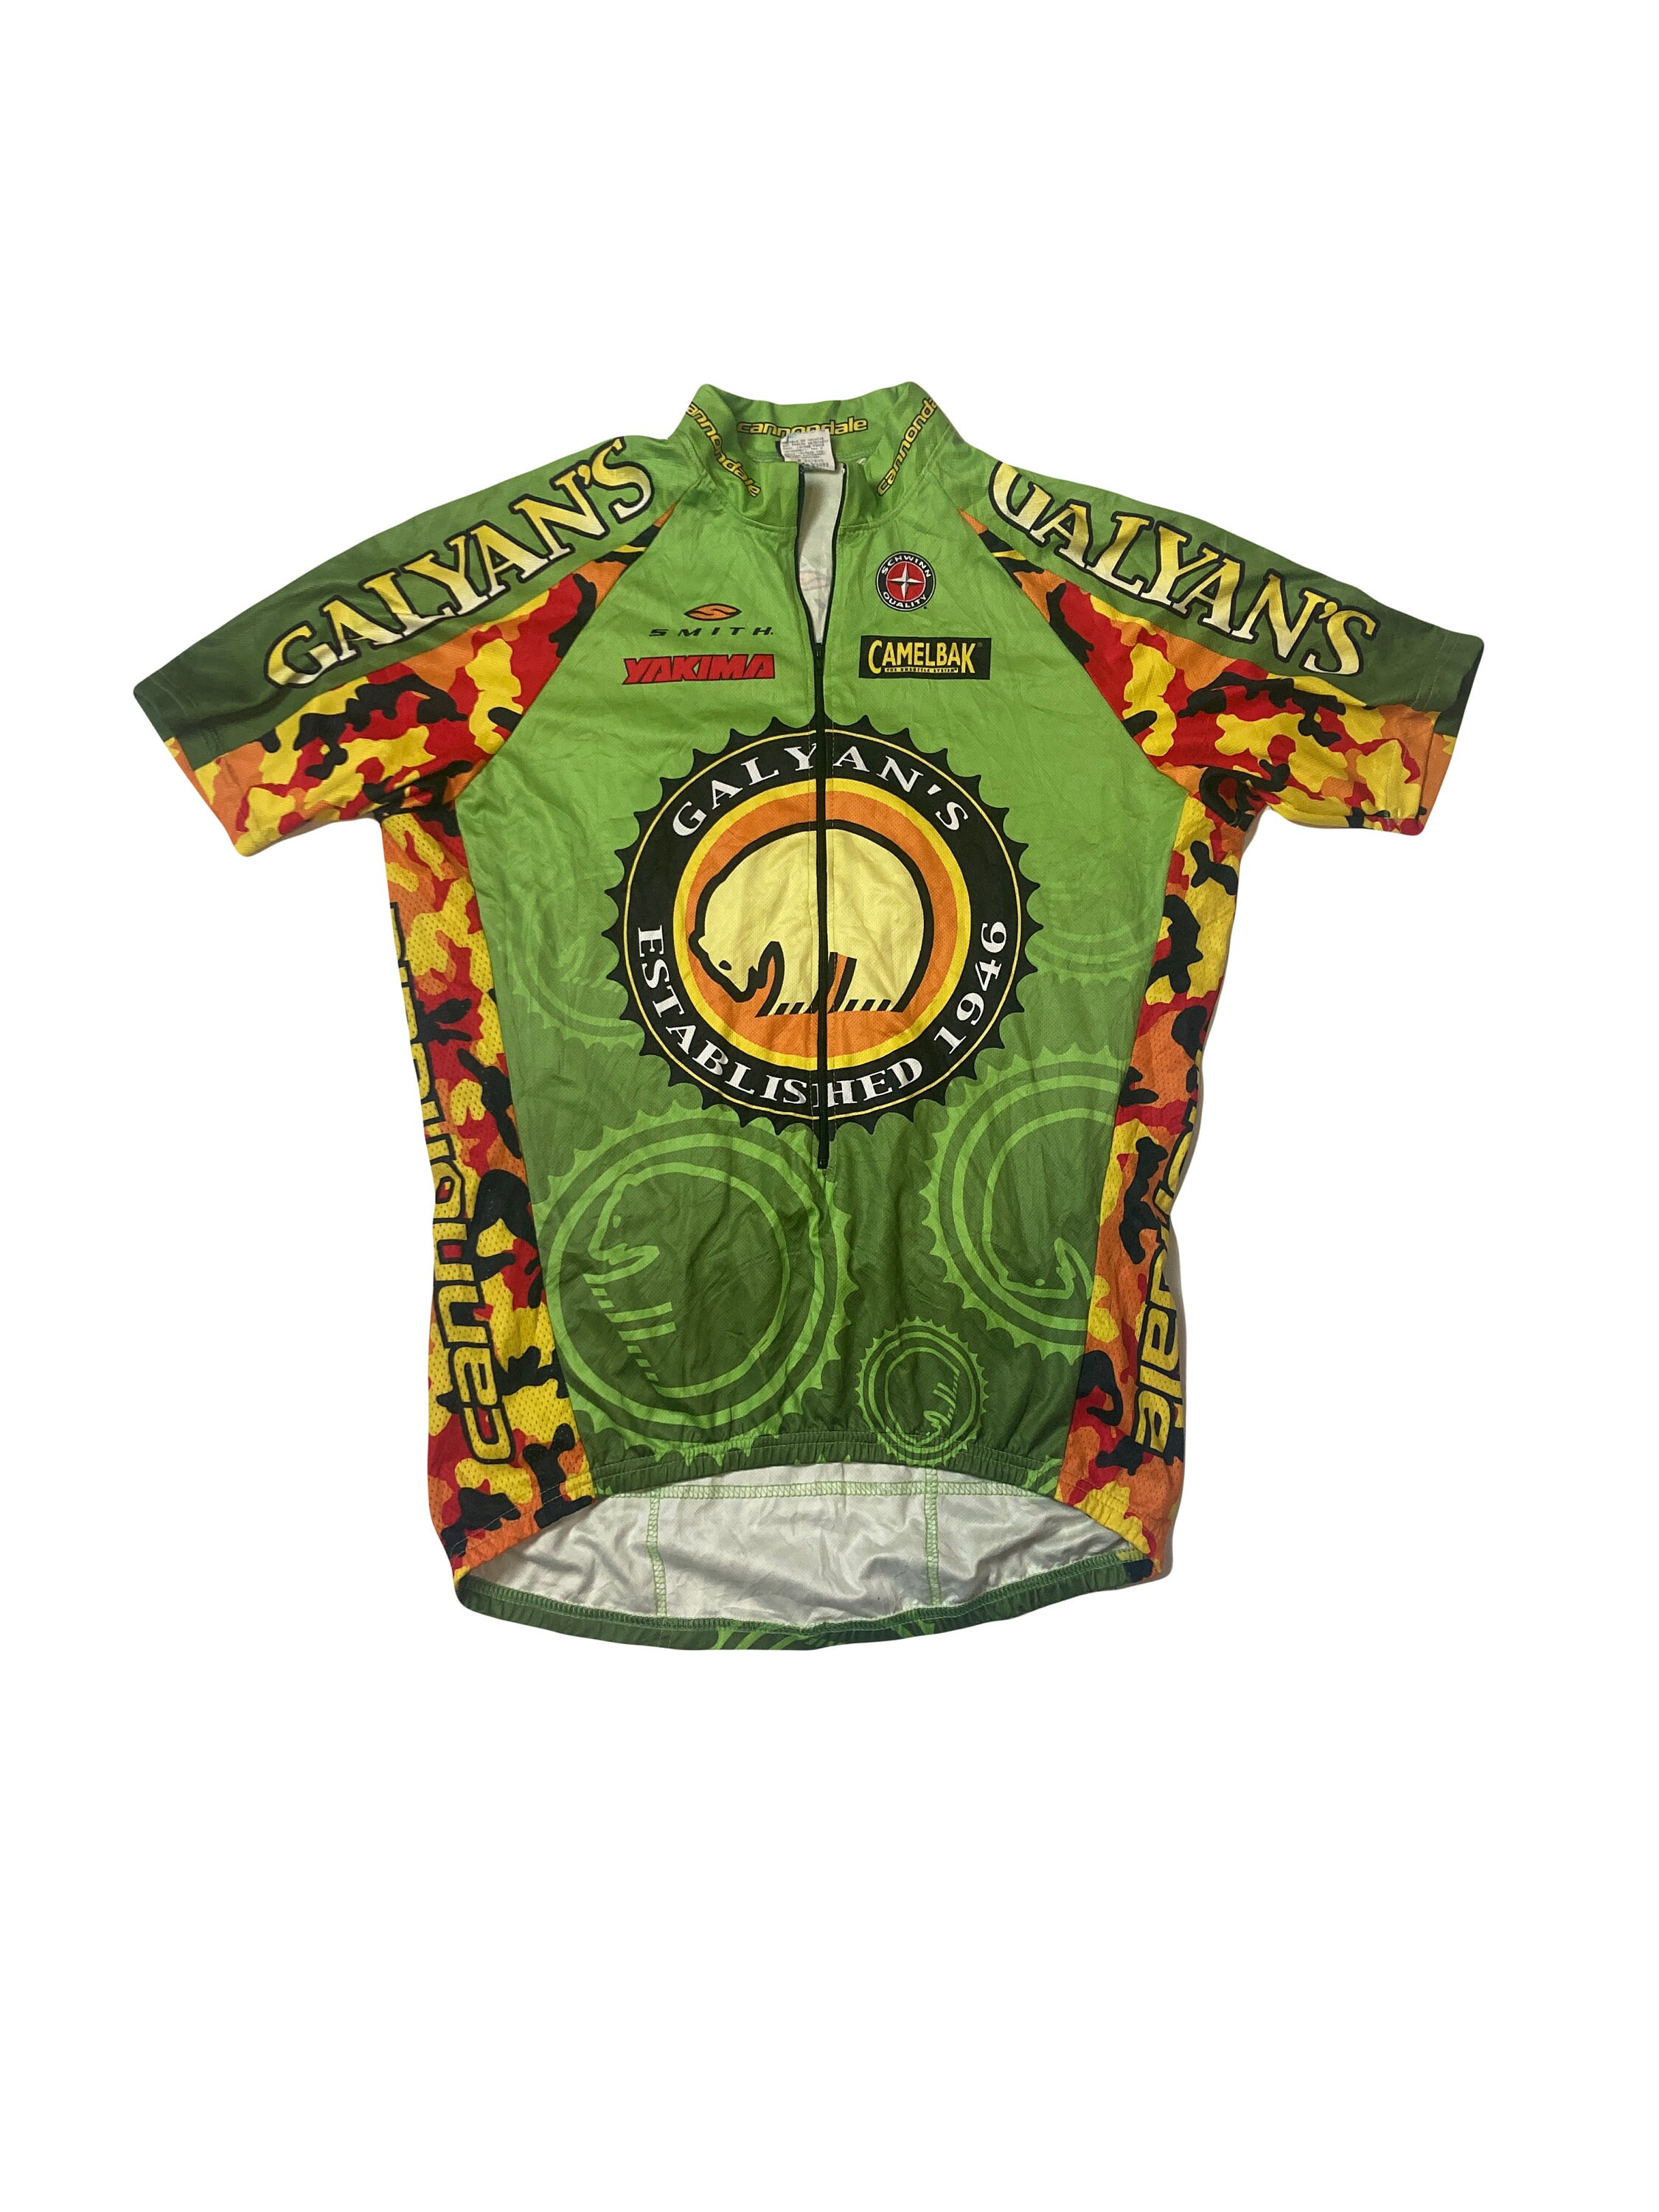 Camo style bike jersey, cycling shirt with camo print, unqiue